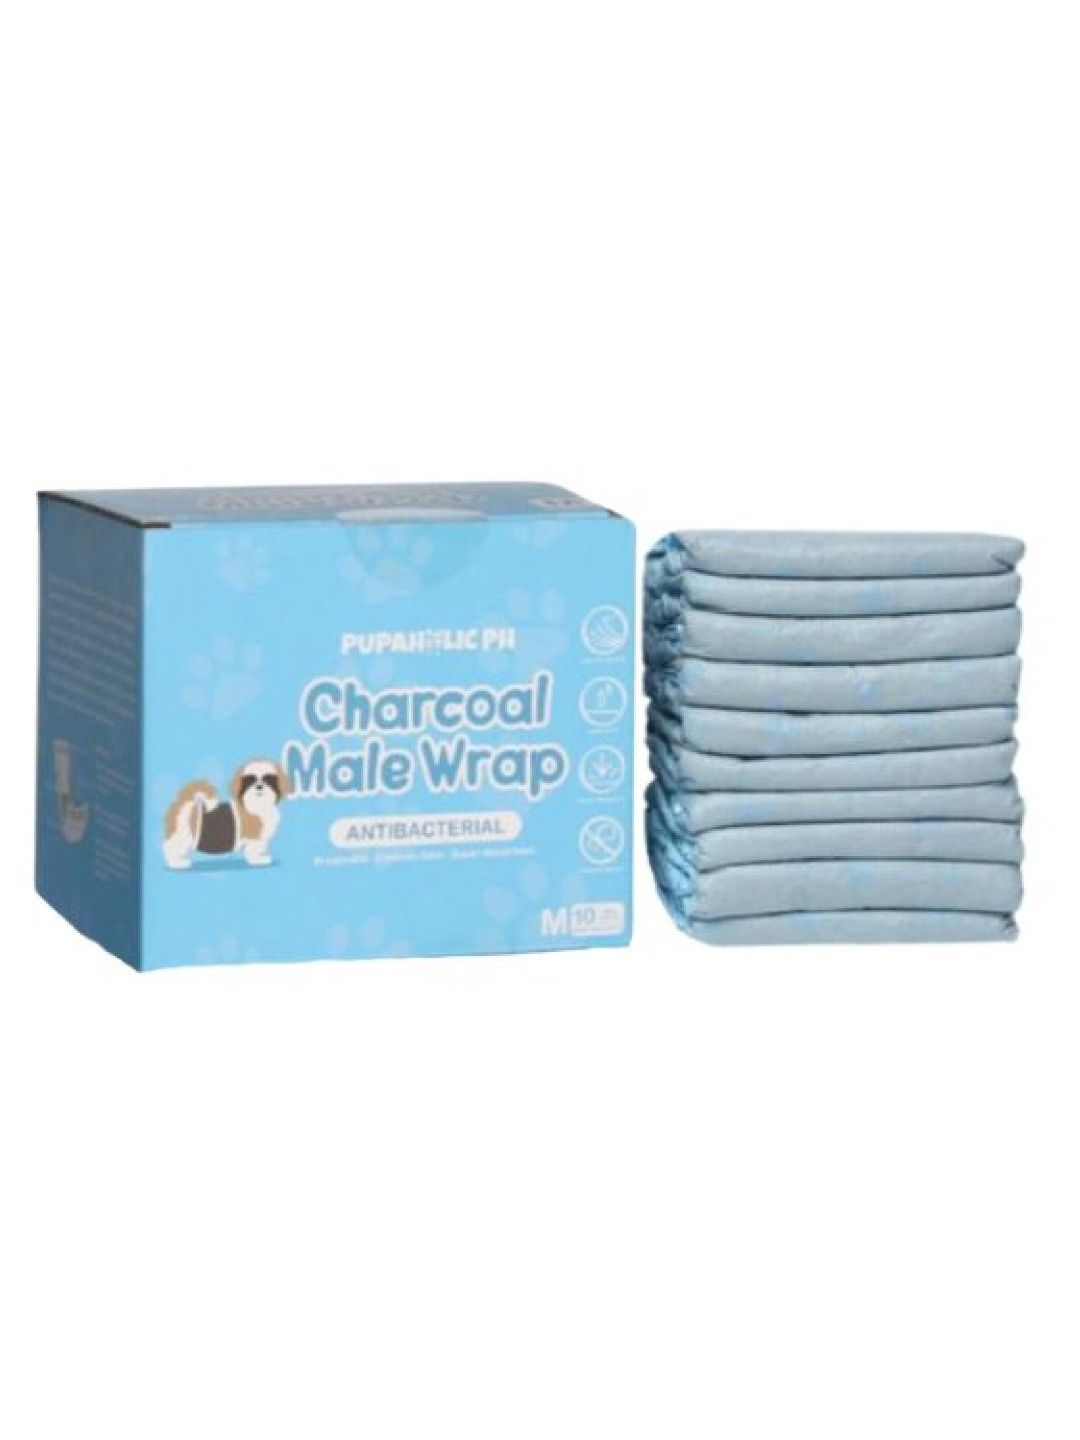 Pupaholic PH 1 Box of Charcoal Male Wrap 10Pcs/Box - Medium